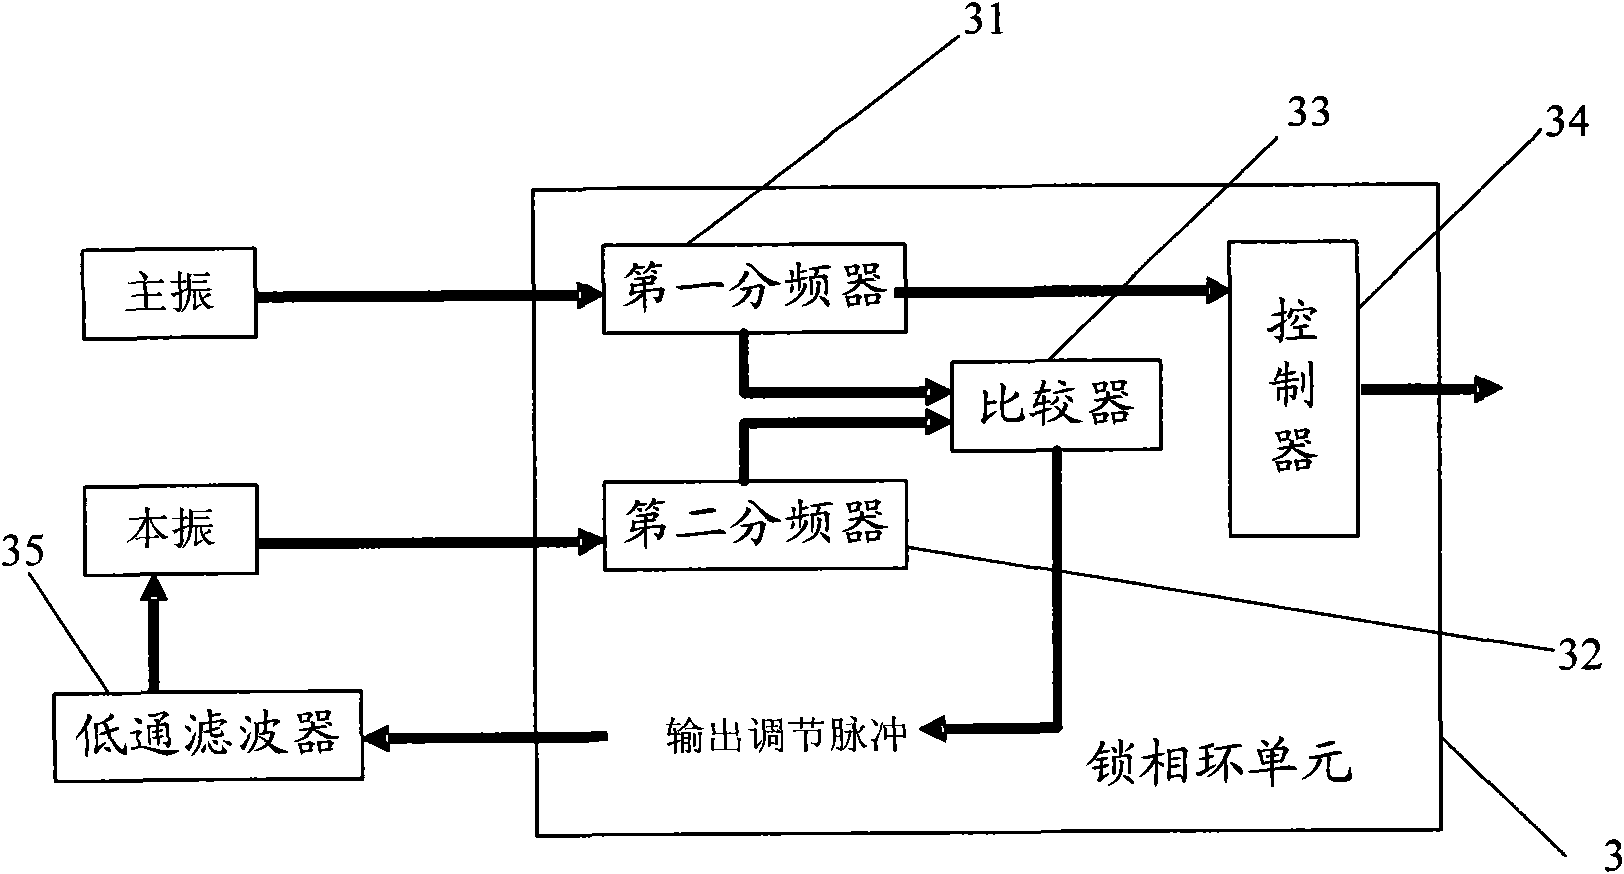 Digital signal processing system of phase rangefinder